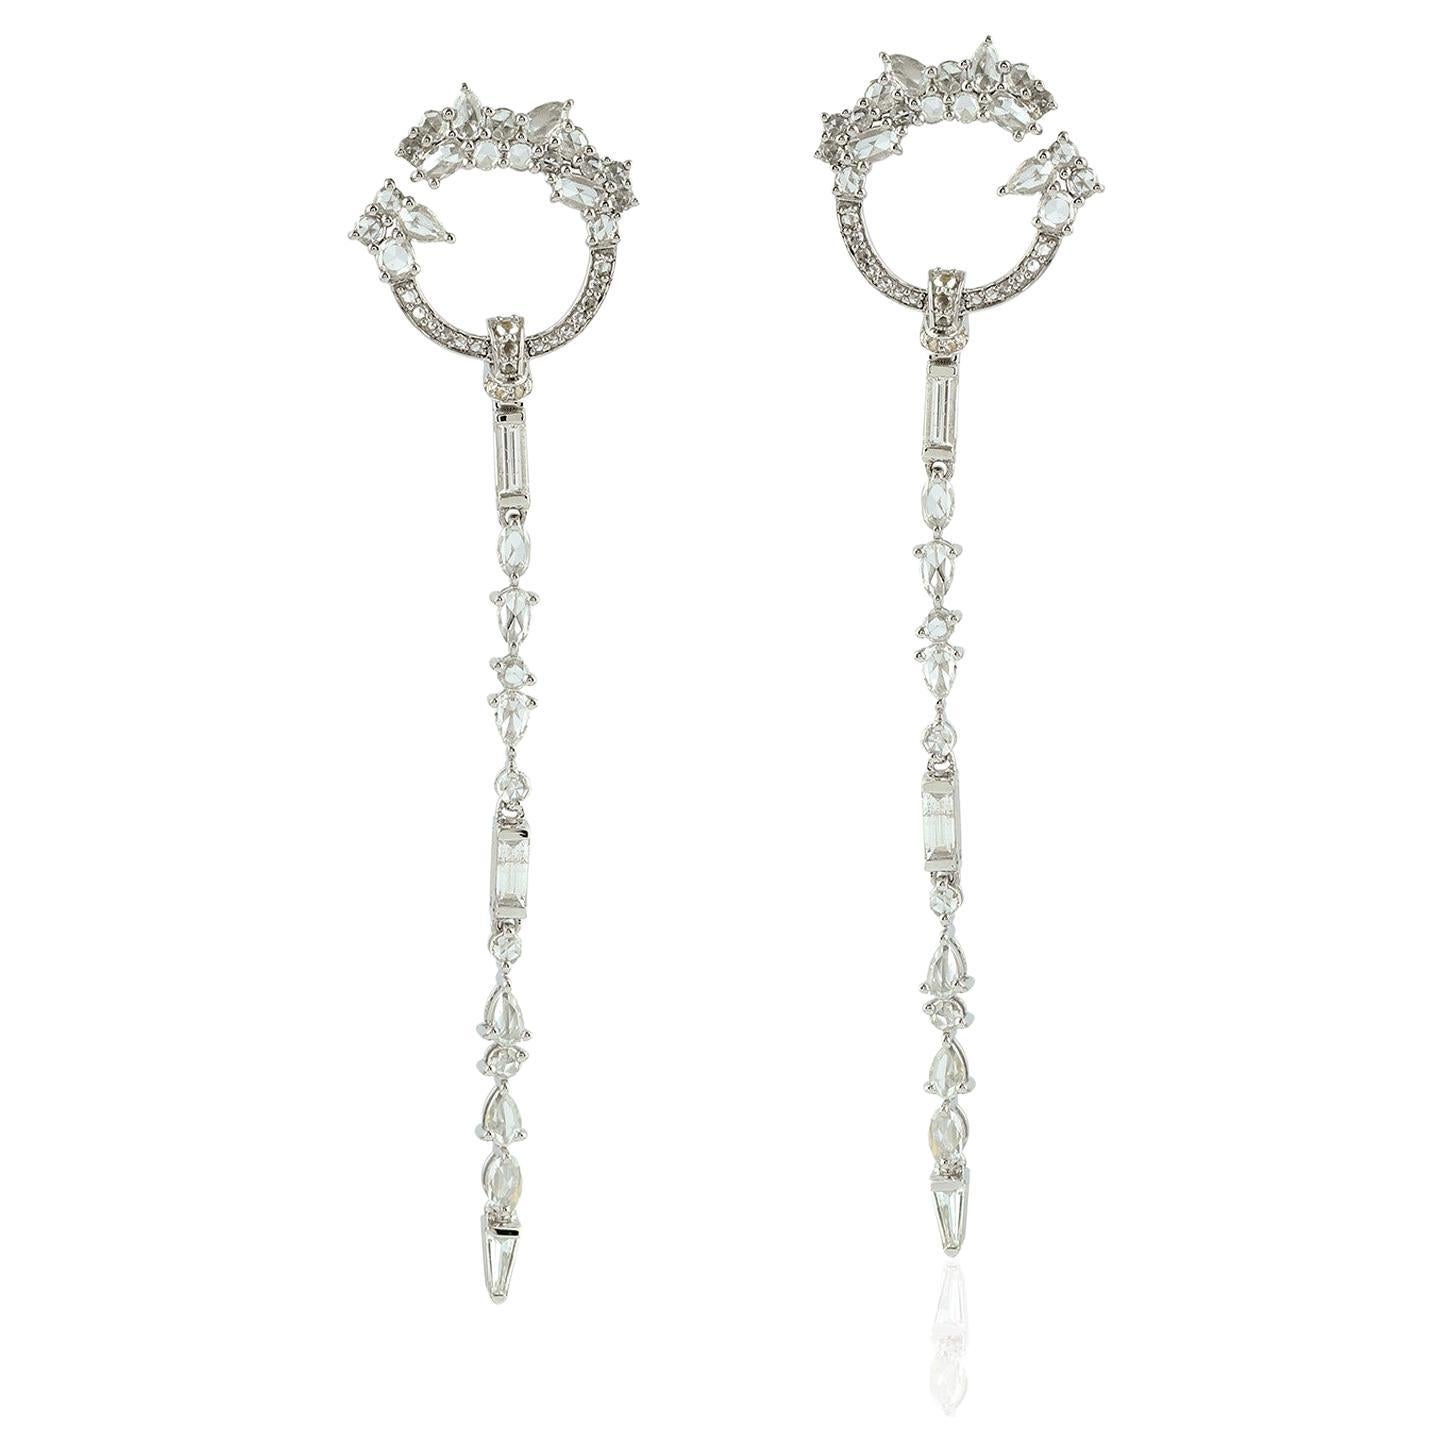 Linear Shaped Rose Cut Diamond Earrings Made In 18k White Gold For Sale